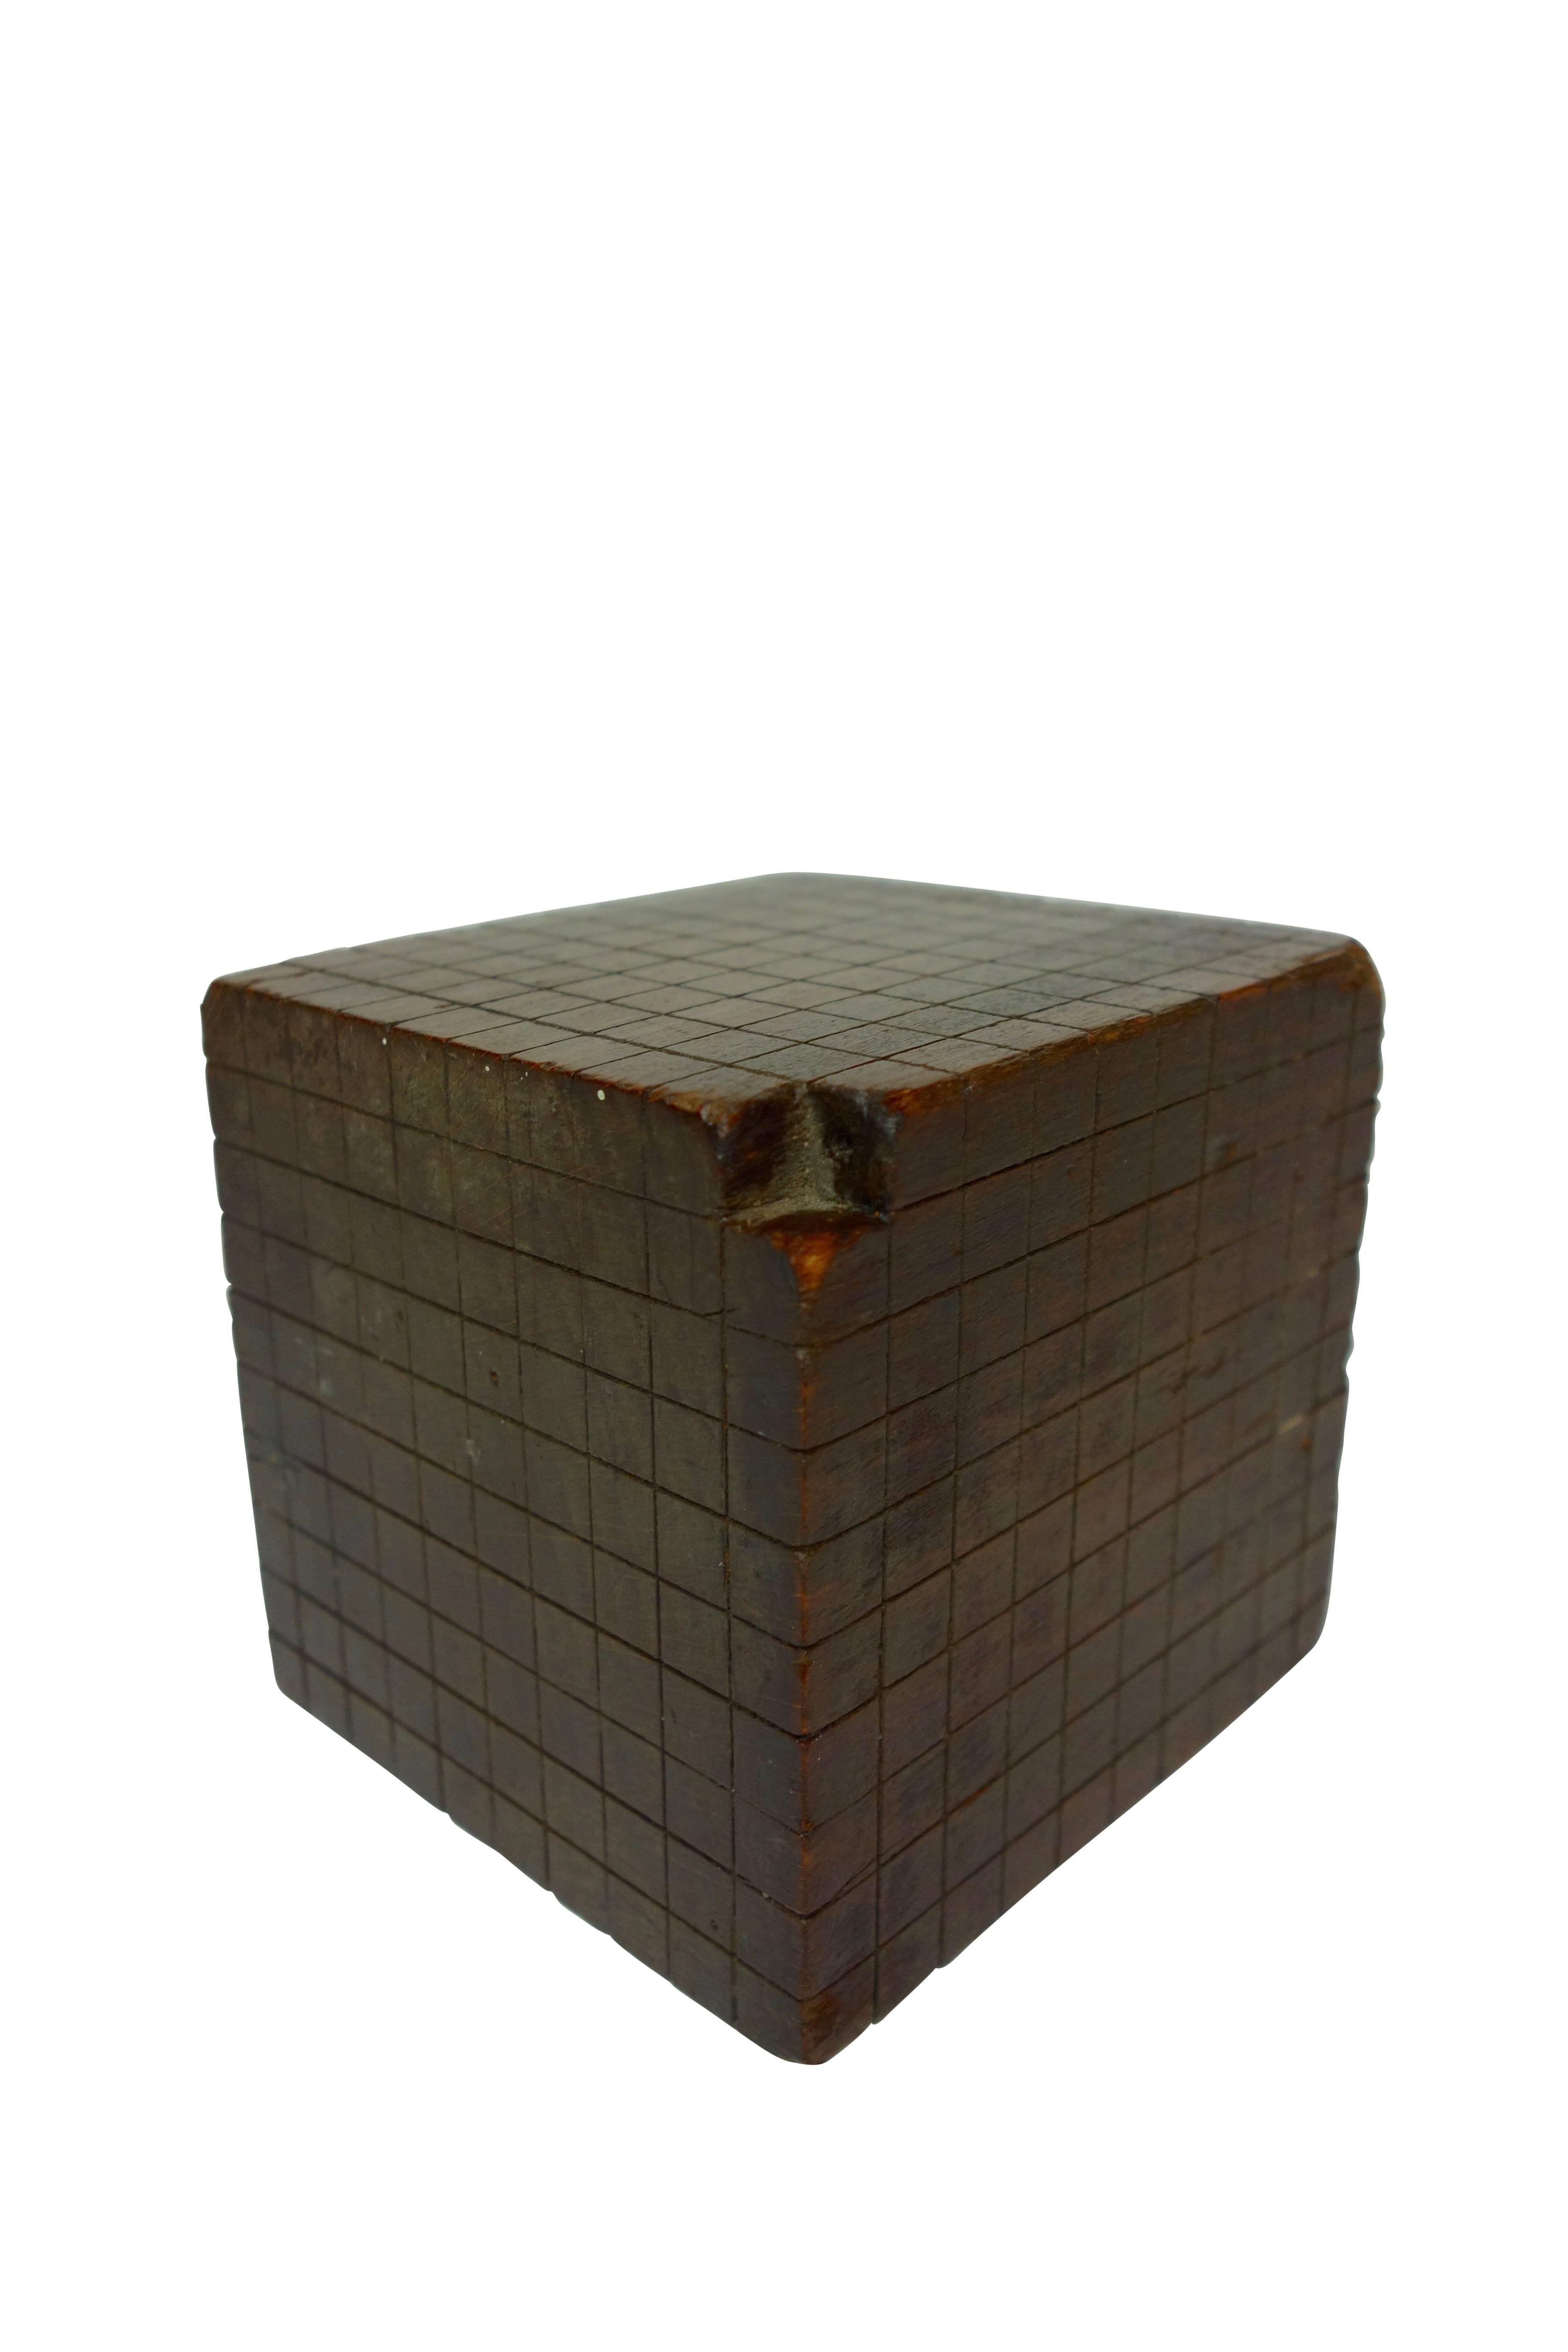 Carved Wood “Base Ten” Cube Educational Model